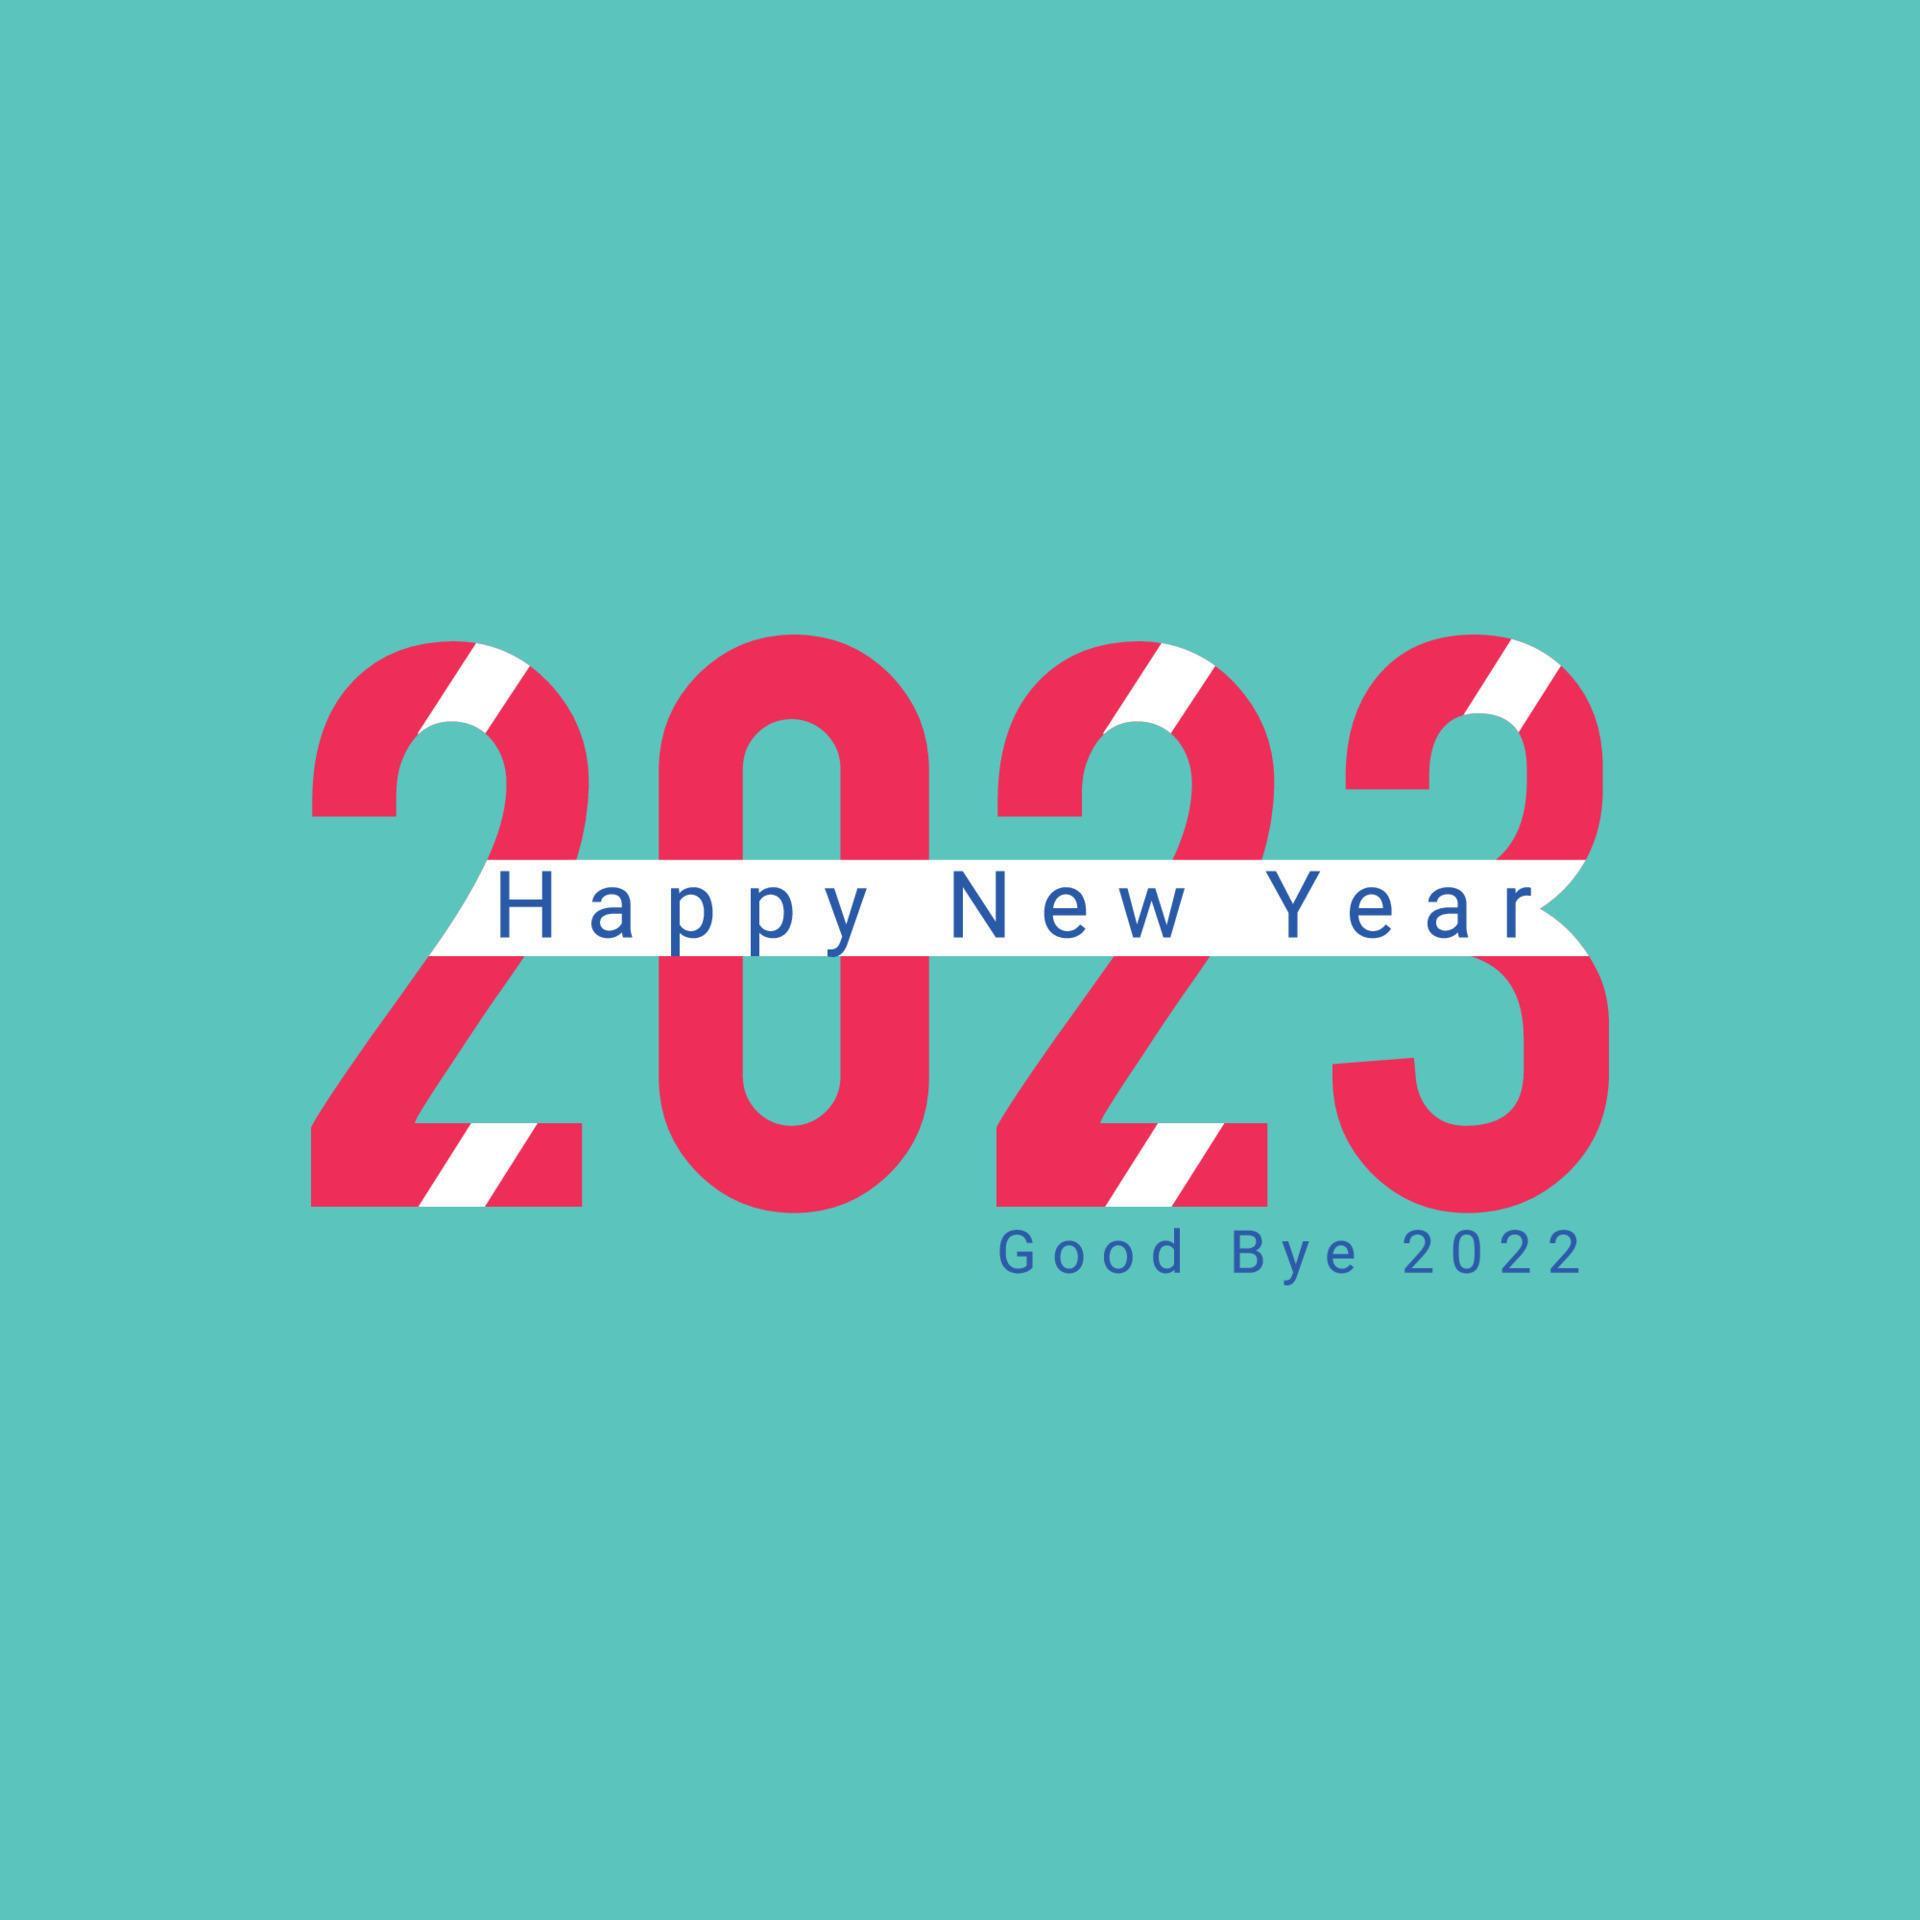 Happy New Year 2023 Free Vector 1